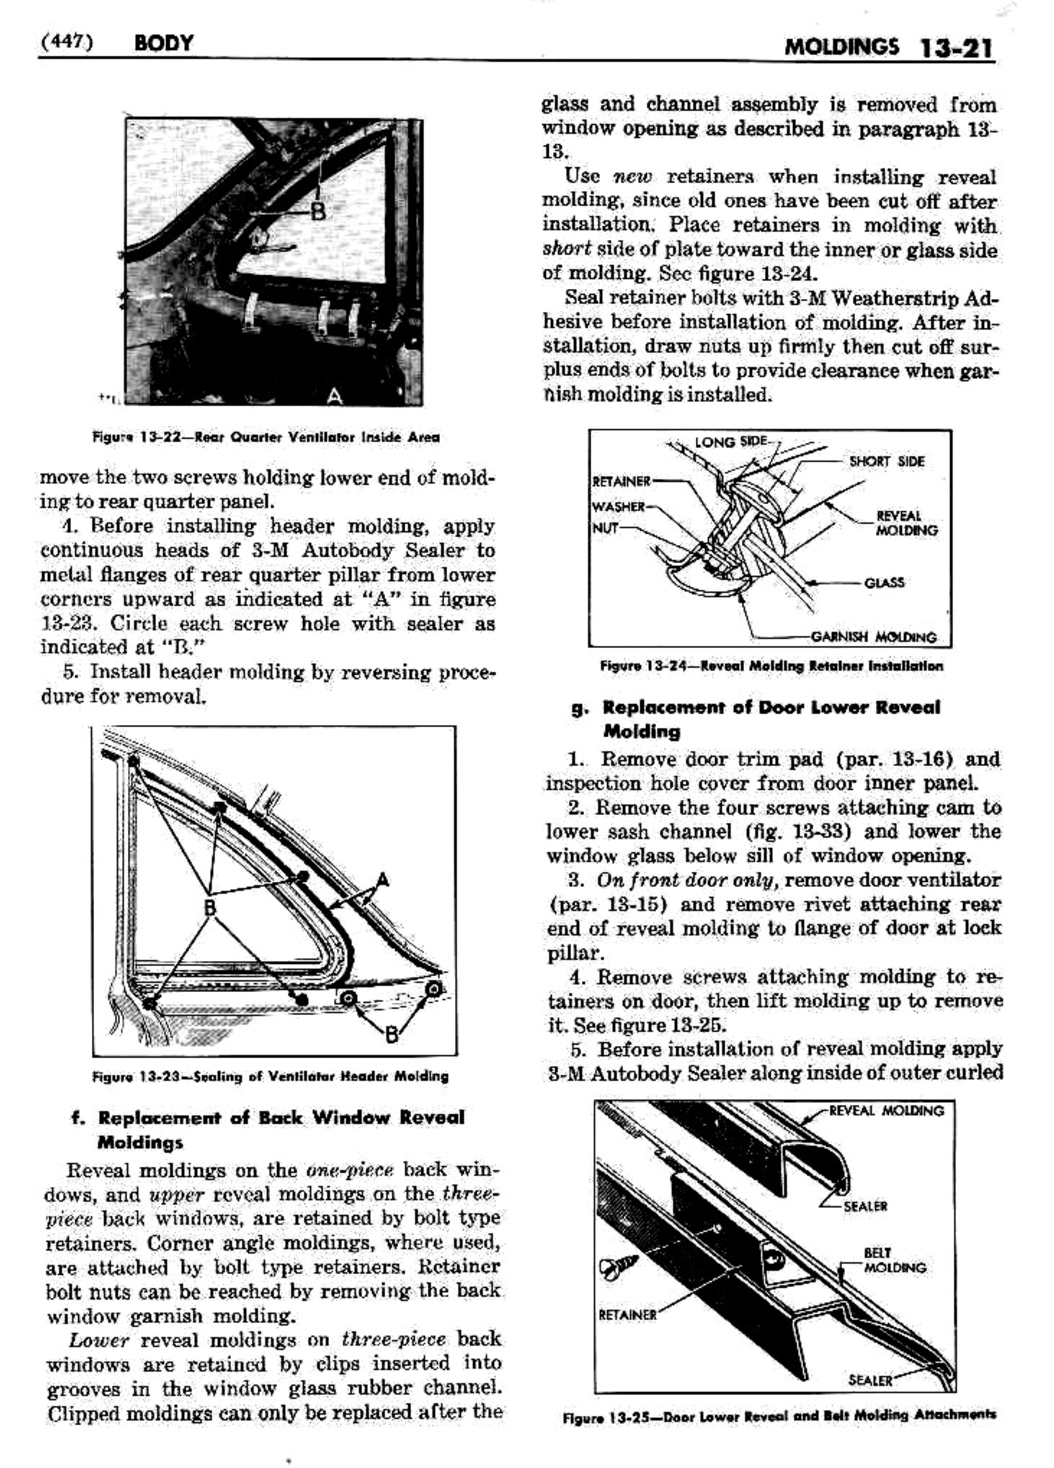 n_14 1951 Buick Shop Manual - Body-021-021.jpg